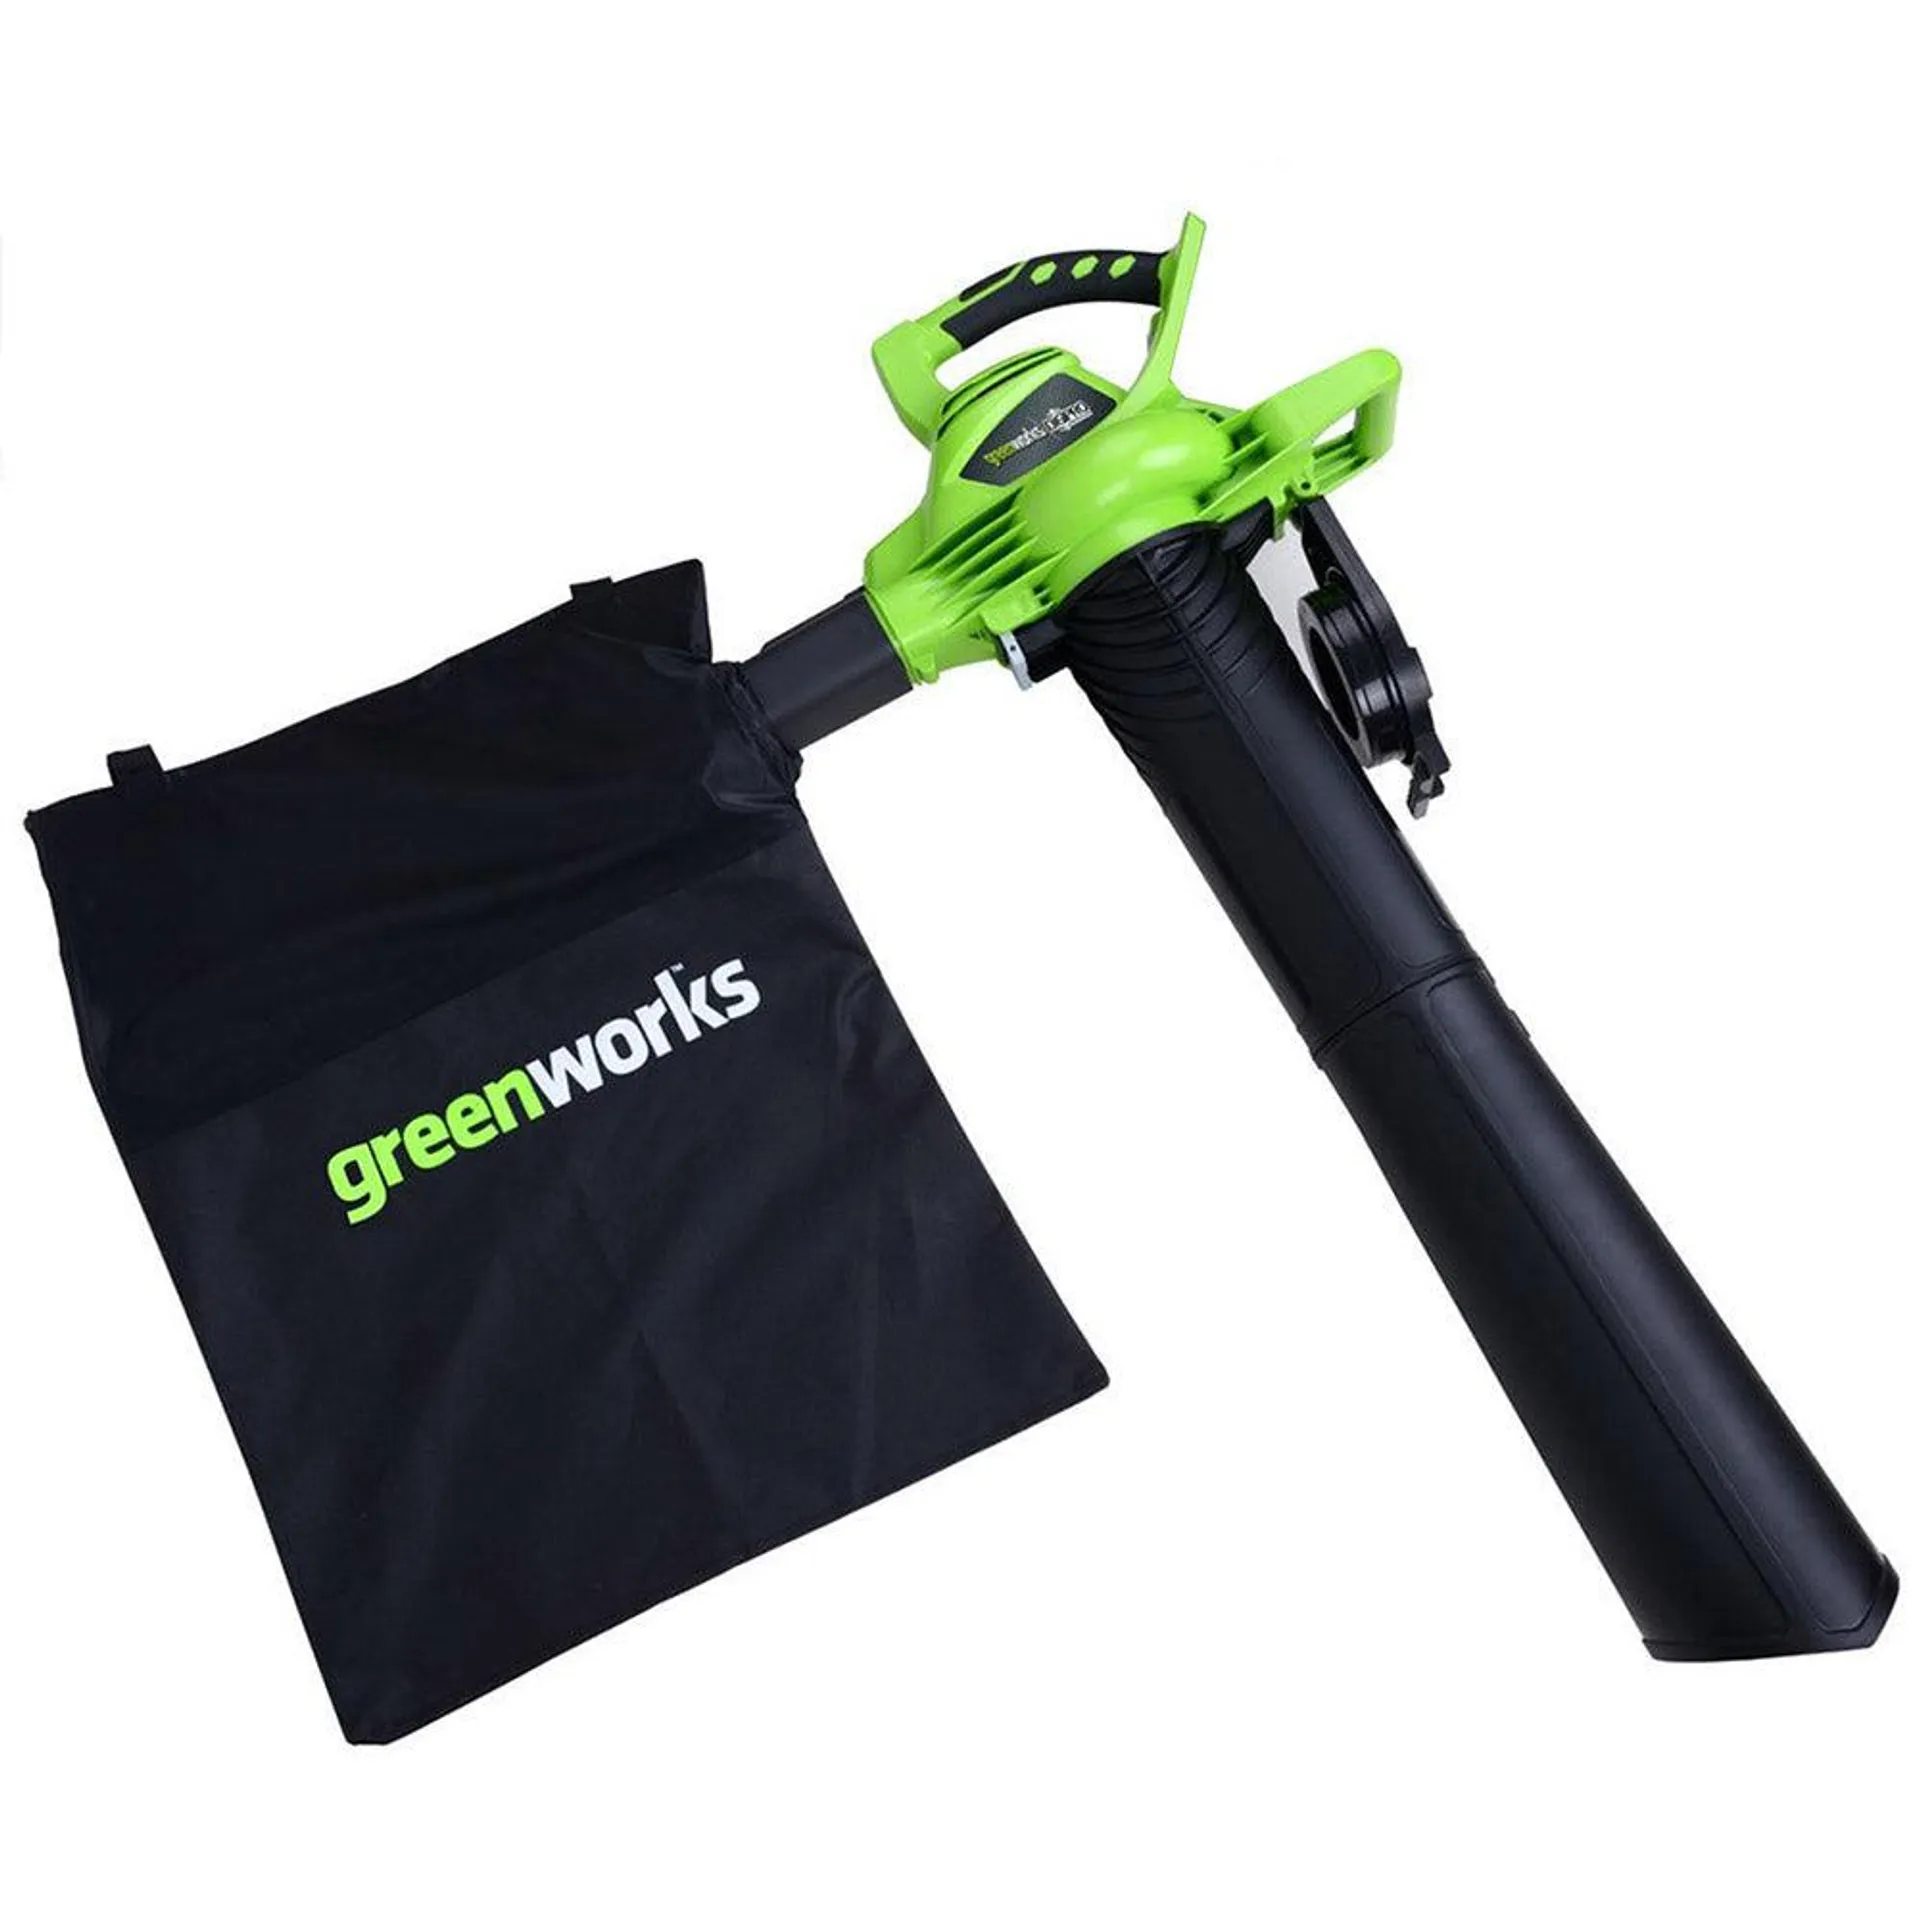 Greenworks Blower Vac G-Max 40V (skin only)